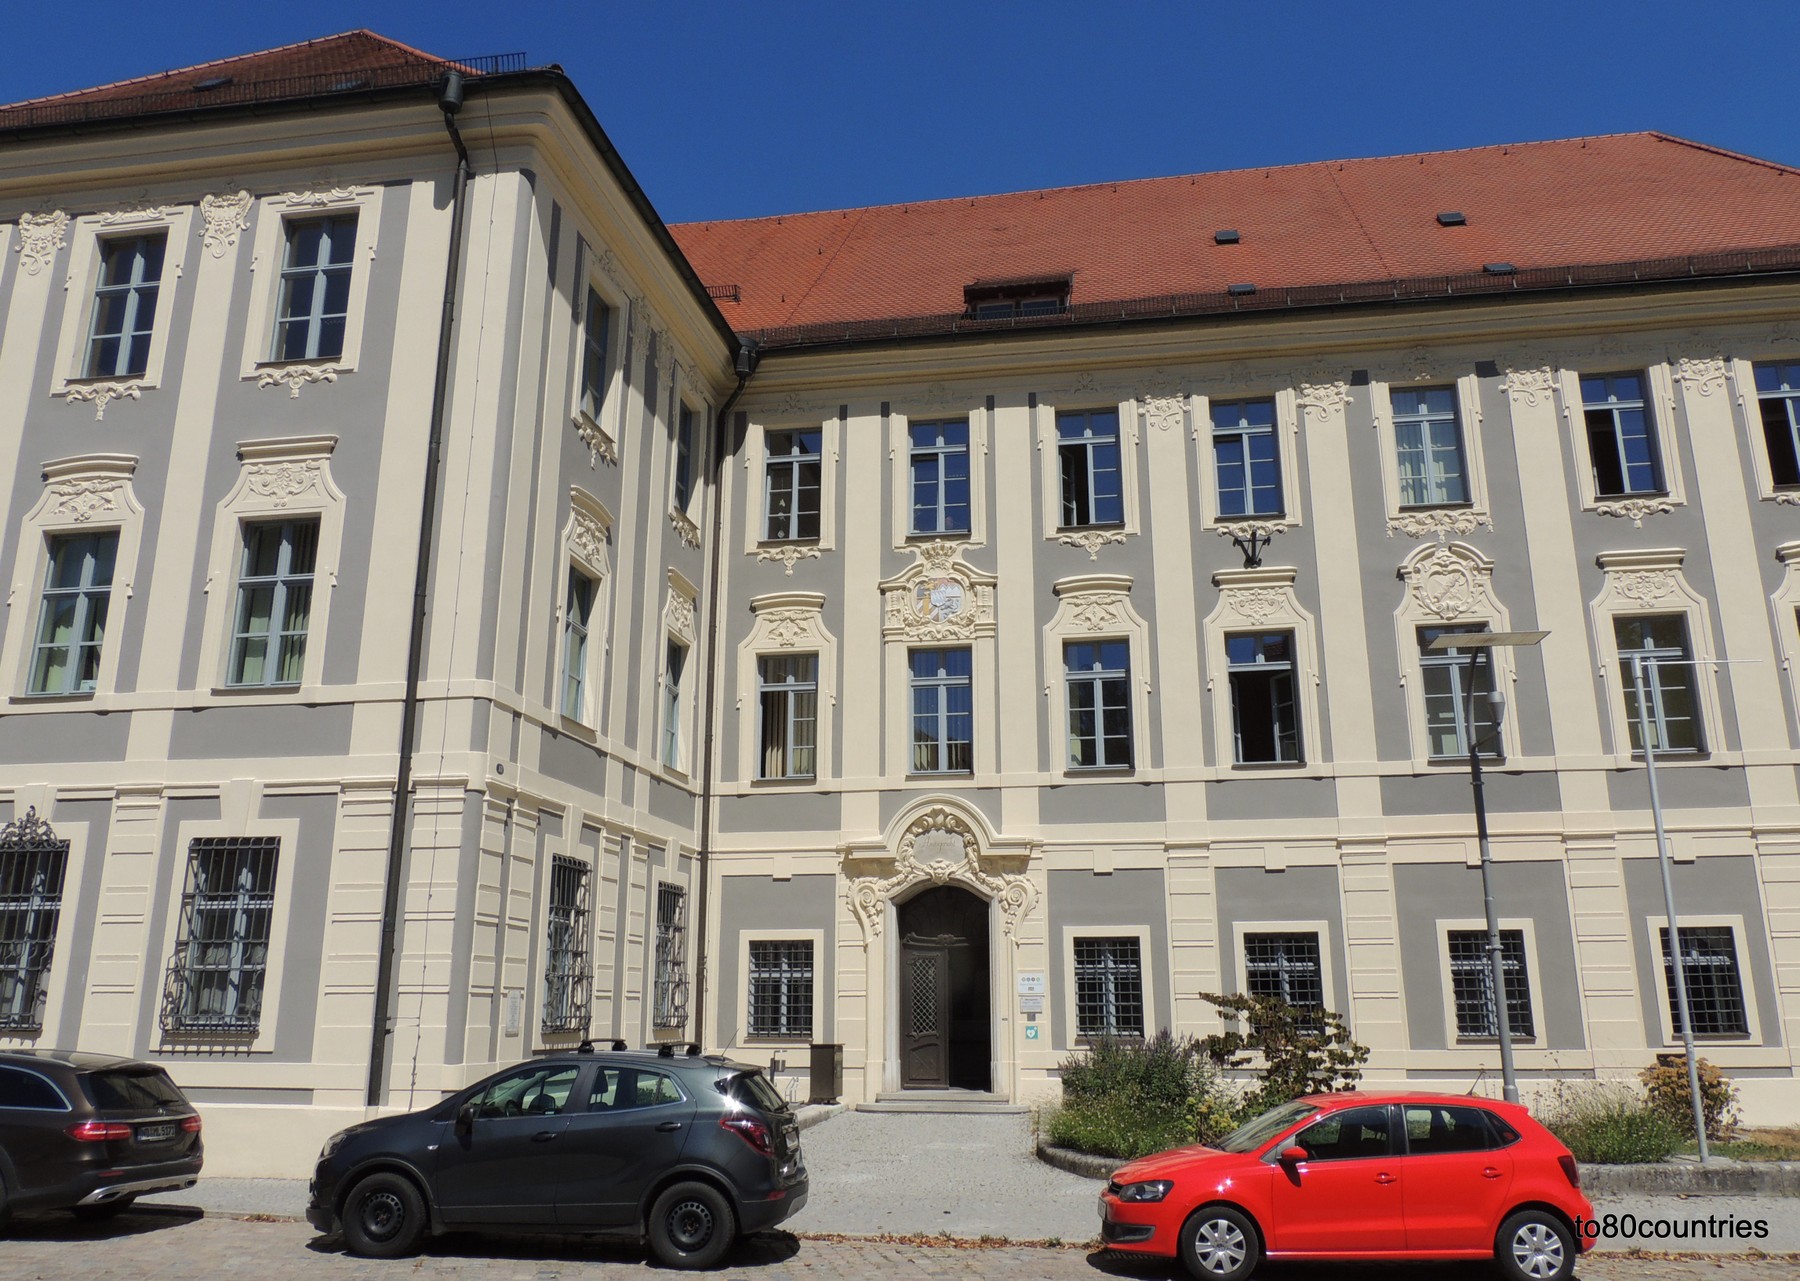 Amtsgericht Neuburg an der Donau